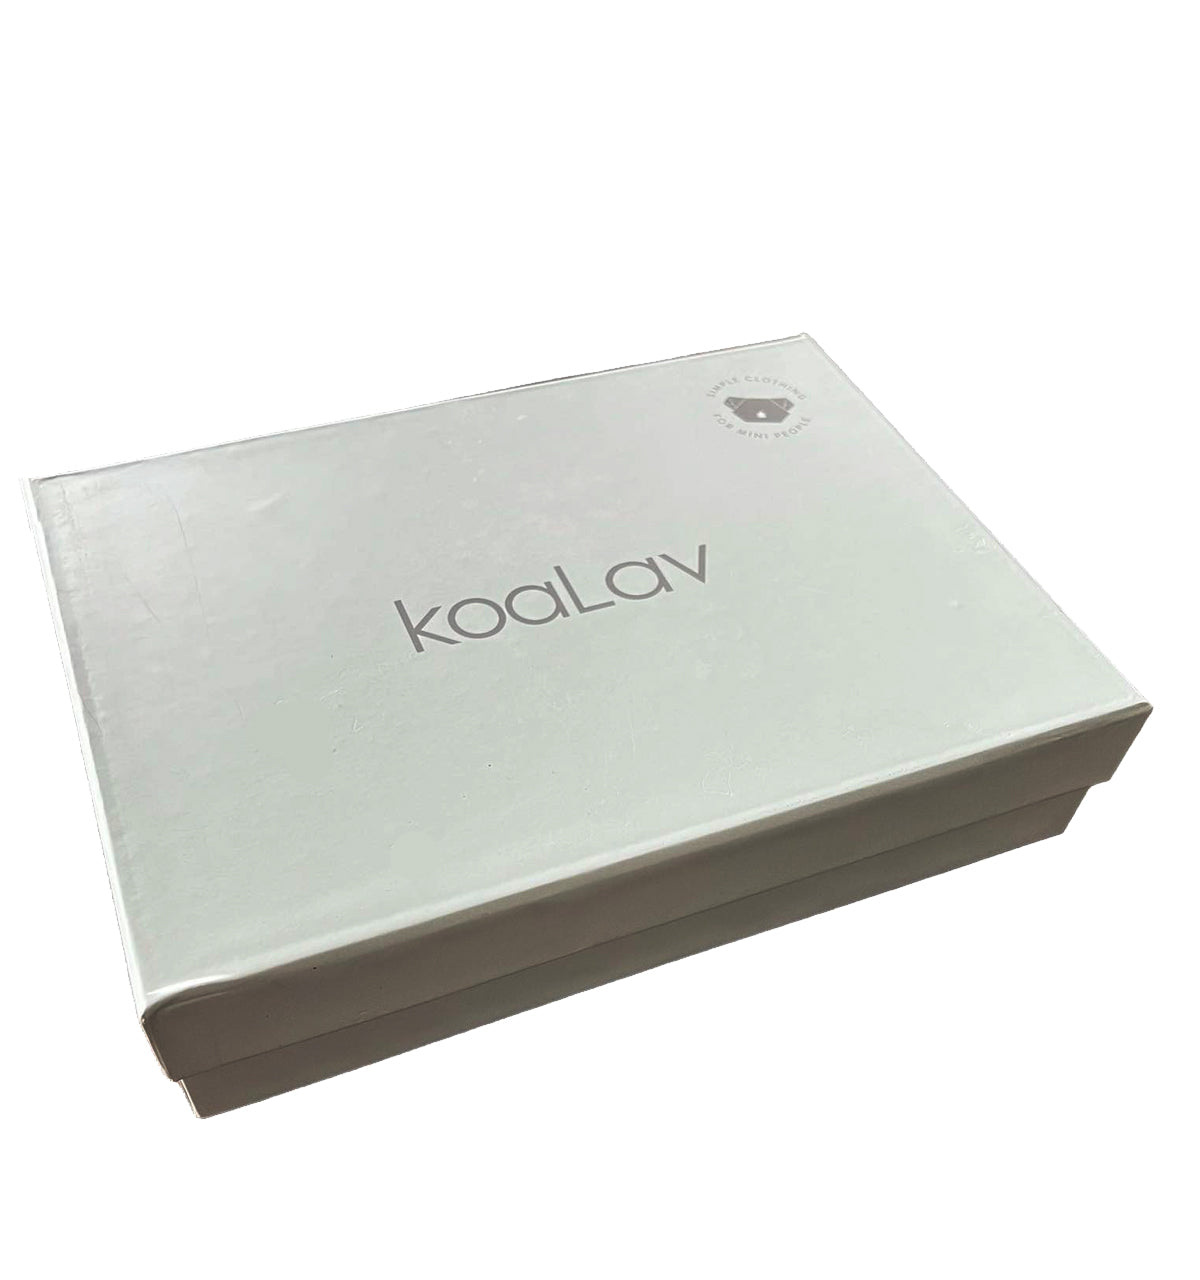 Koalav - Organic Newborn Home Coming Set in a Box | Pine | 6pcs